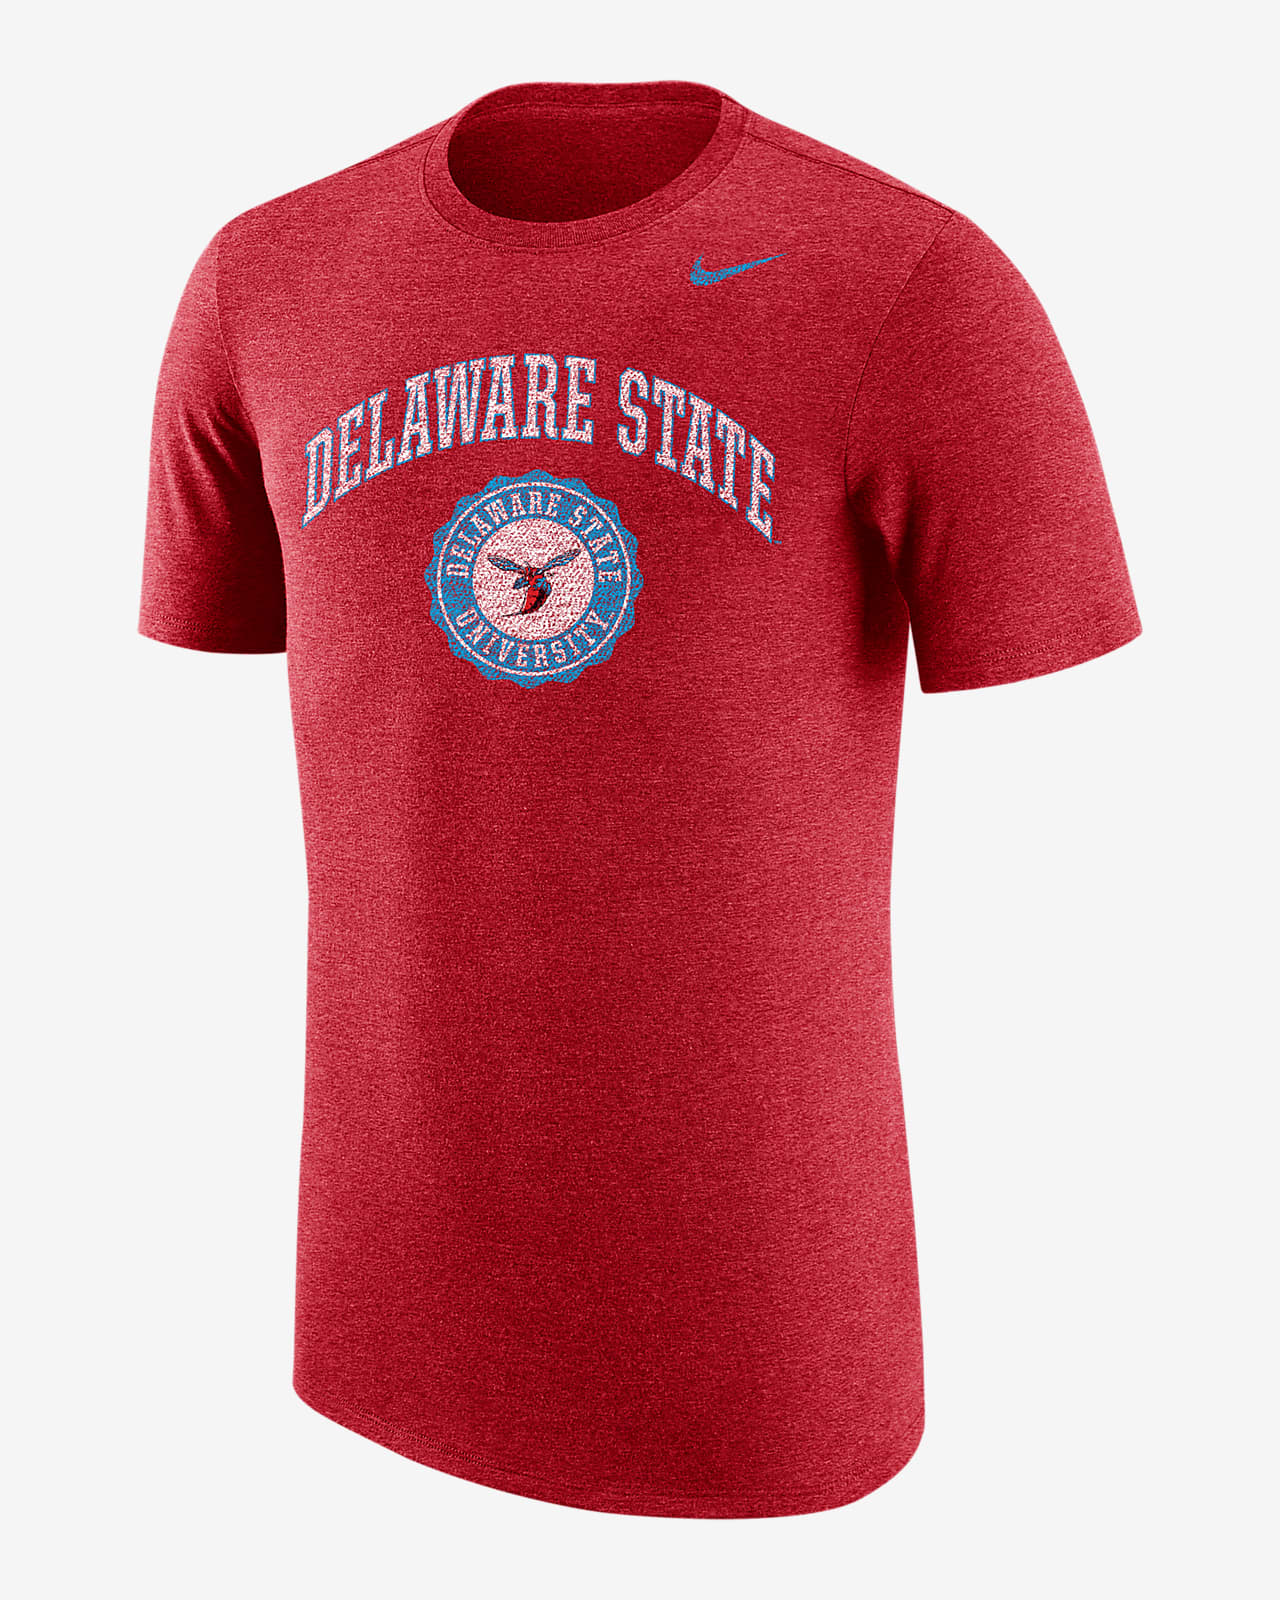 Nike College (Delaware State) Men's T-Shirt